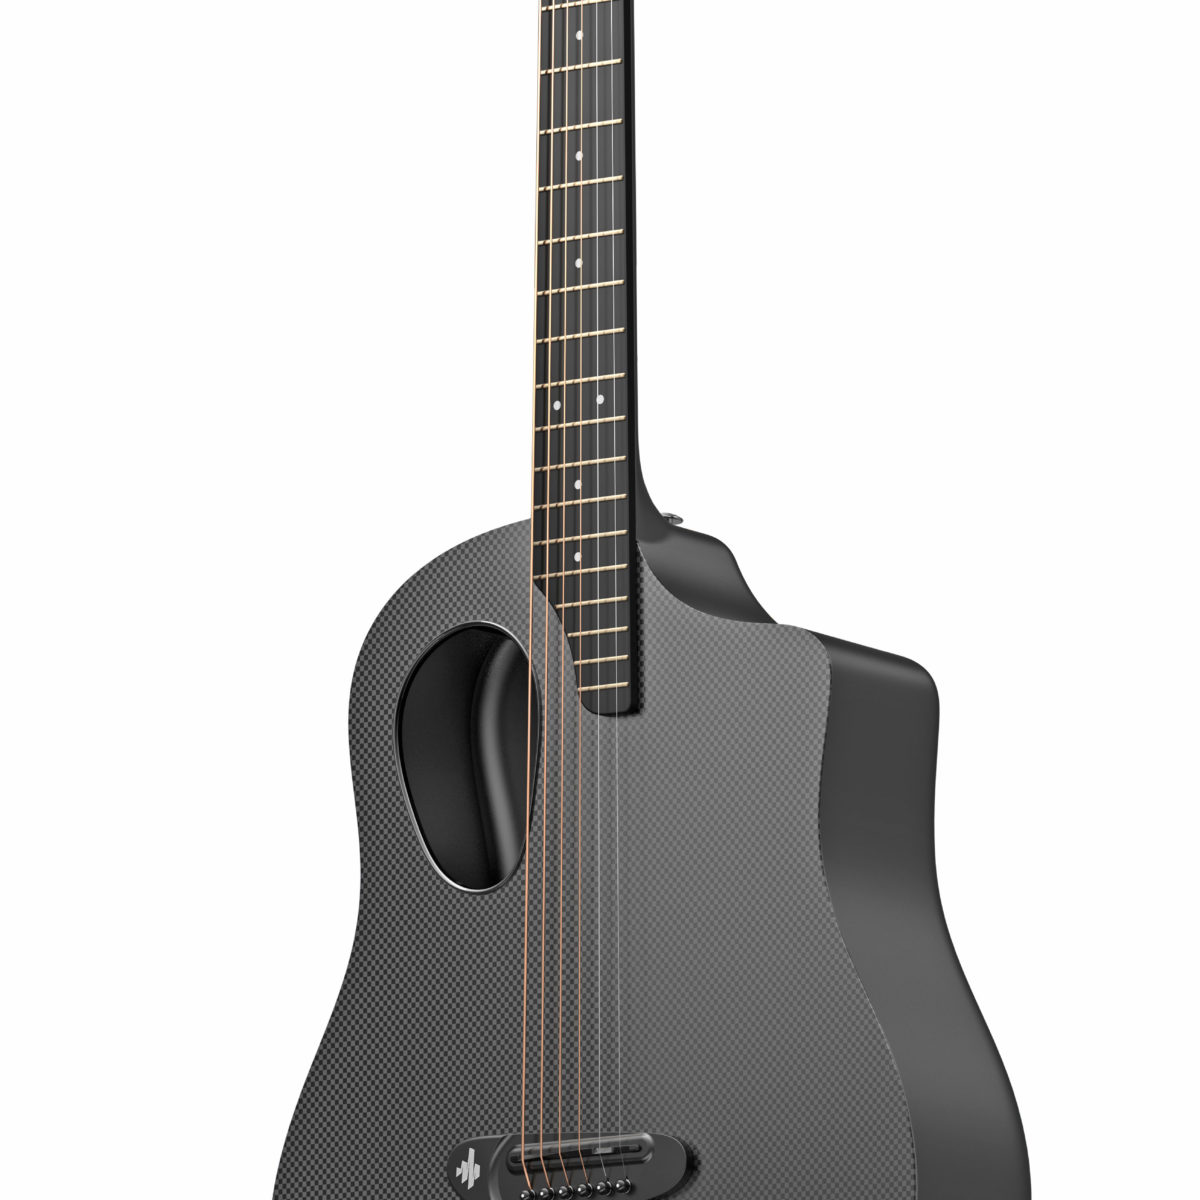 New Toys: Donner Music Rising-G Pro Series Carbon Fiber Acoustic